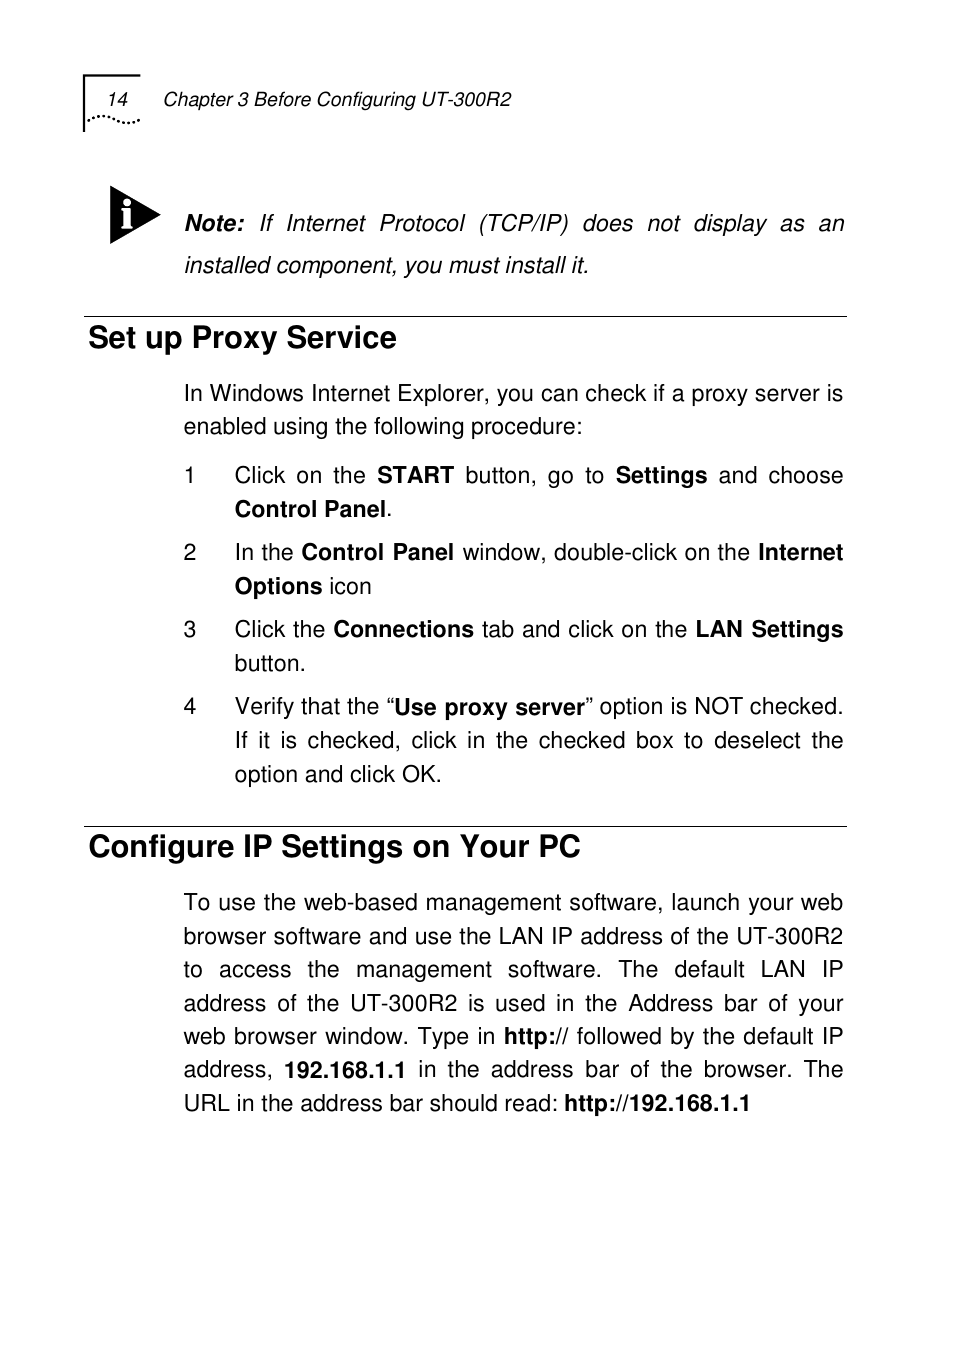 Set up proxy service, Configure ip settings on your pc | UTStarcom UT-300R2 User Manual | Page 17 / 85